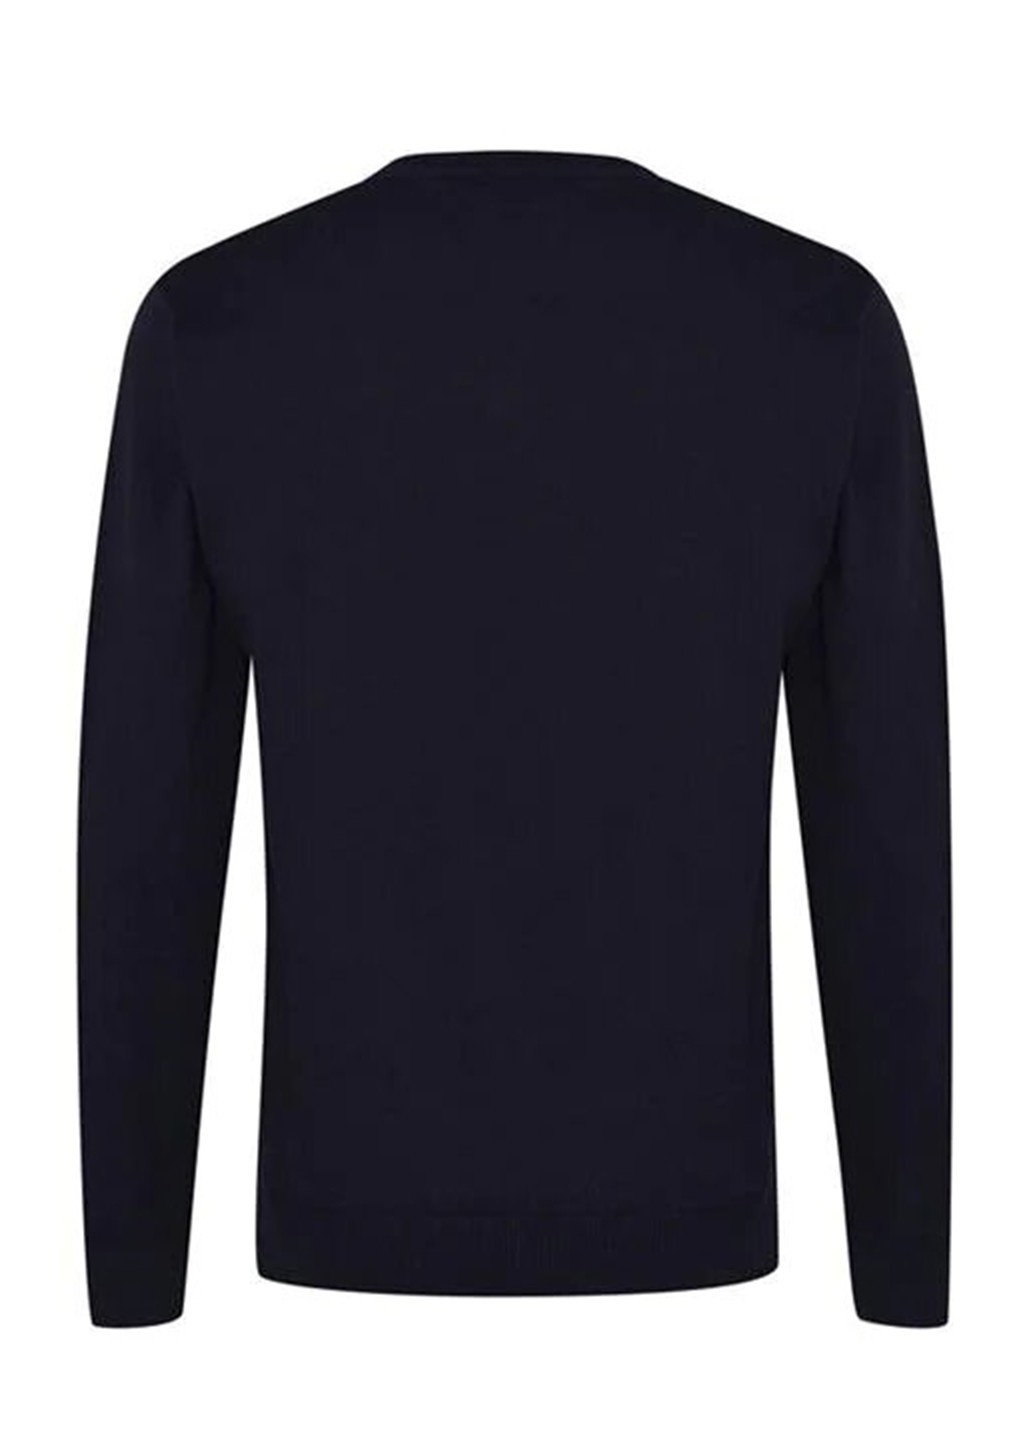 Темно-синий демисезонный пуловер пуловер Pierre Cardin